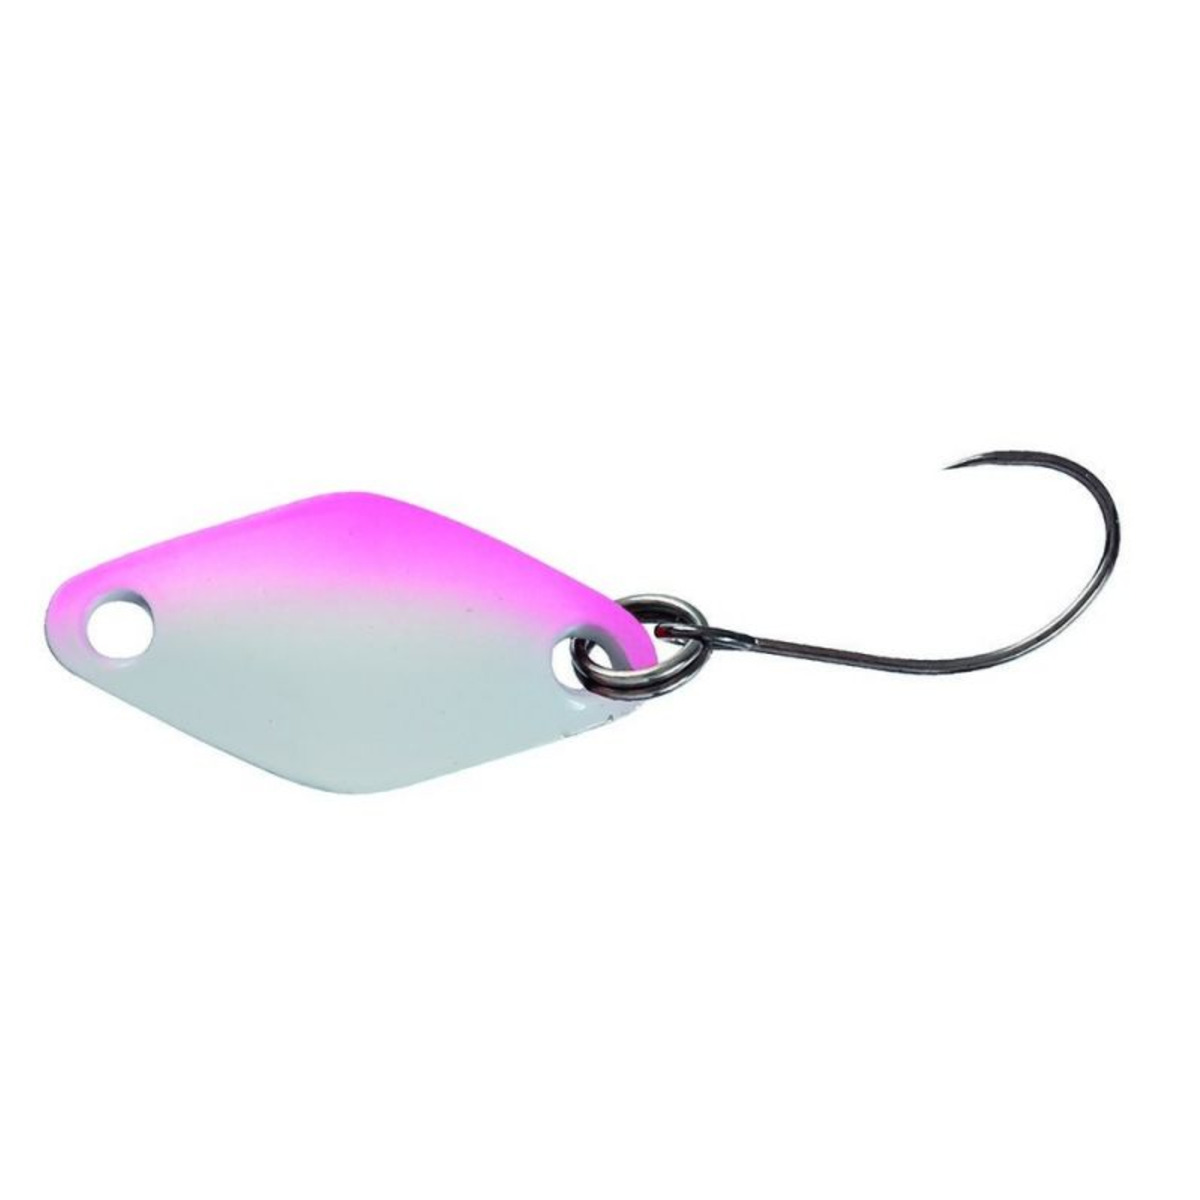 Herakles Kite Spoon - 1.2 g - White Pink